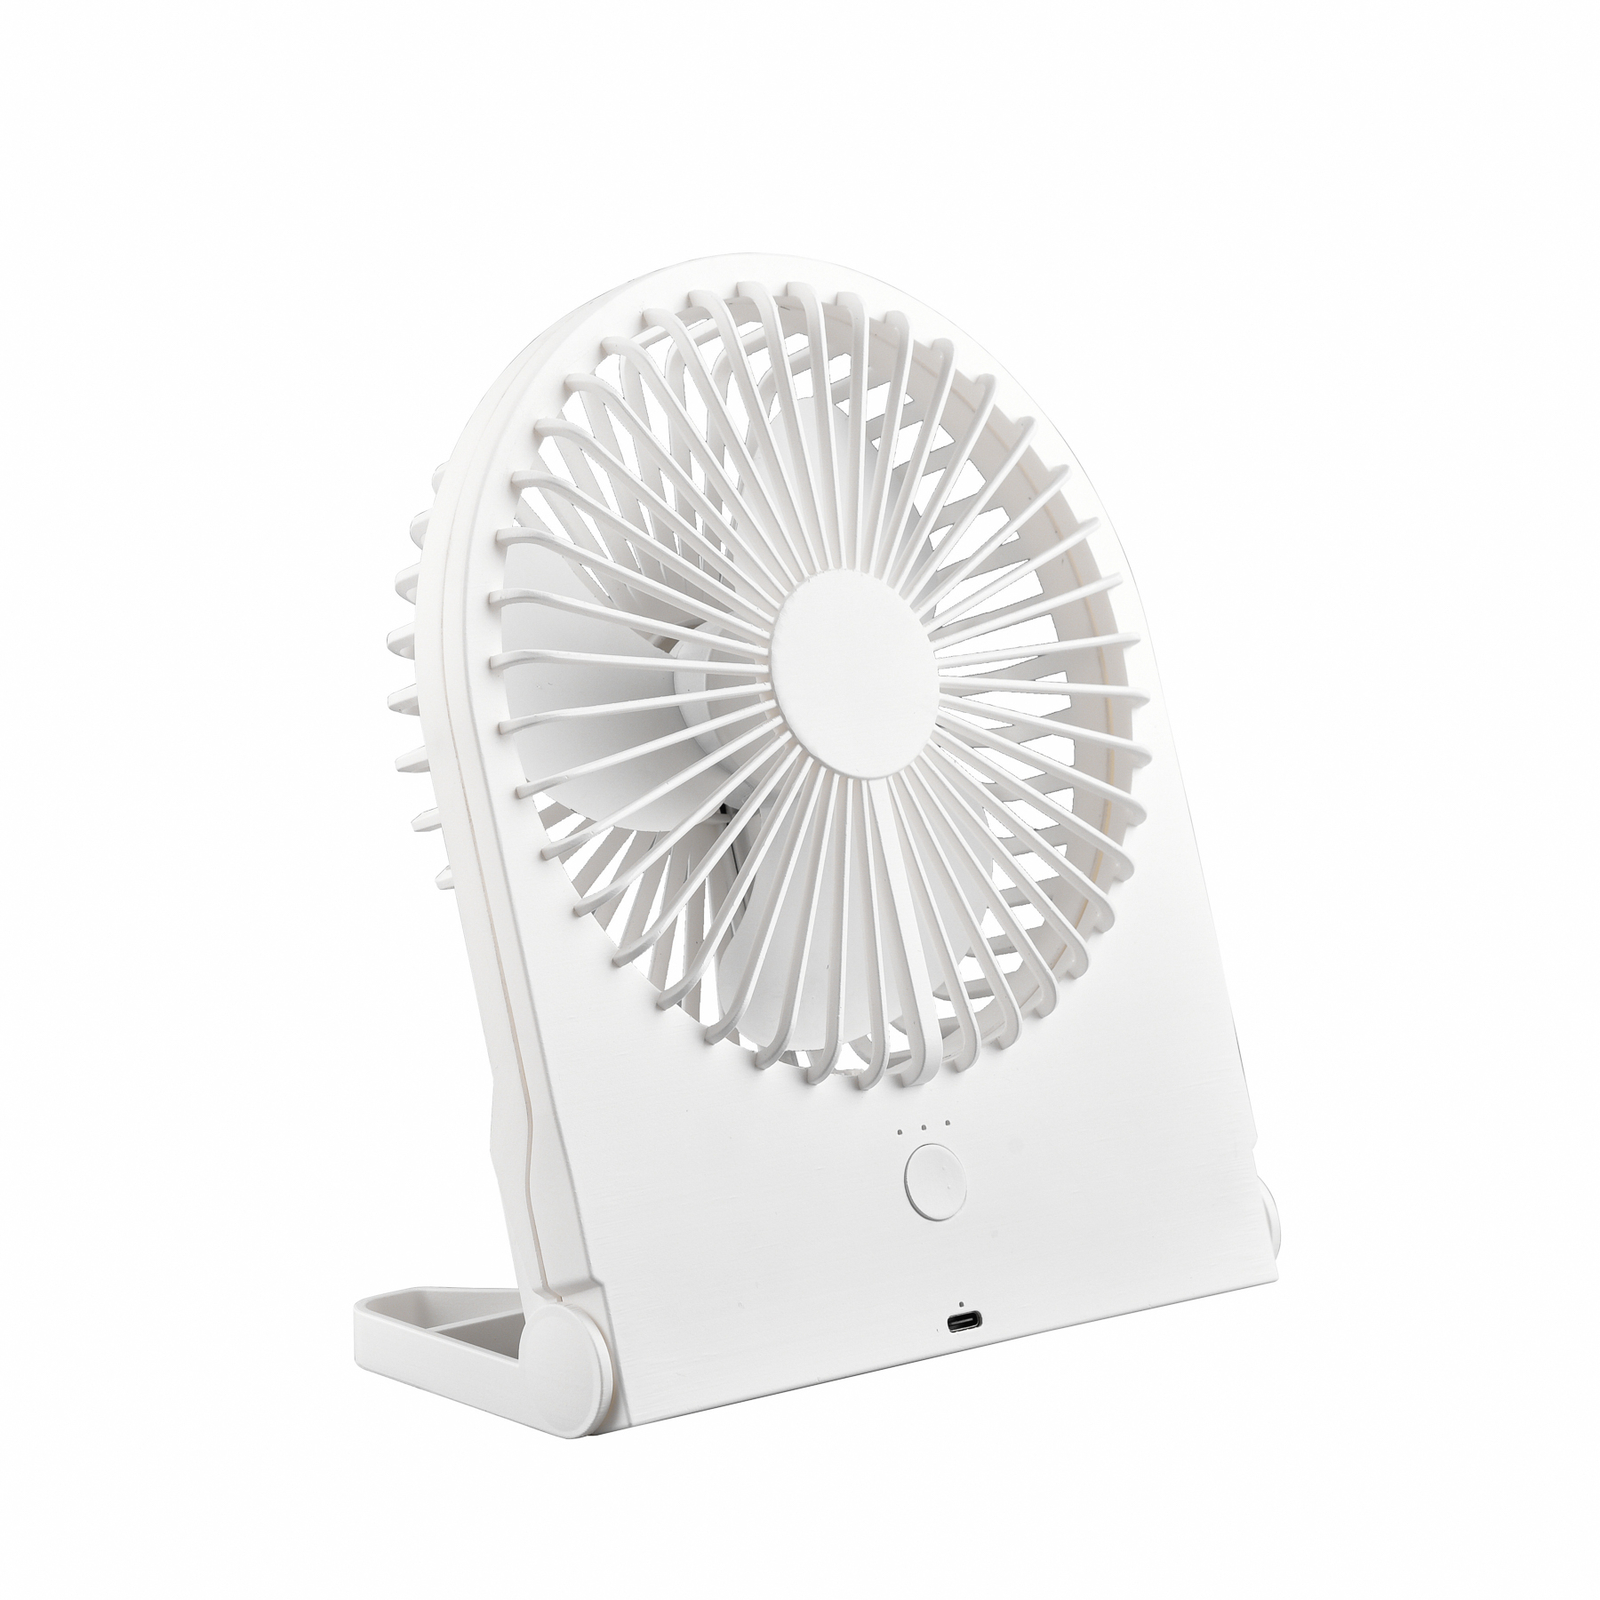 Breezy rechargeable table fan, white, quiet